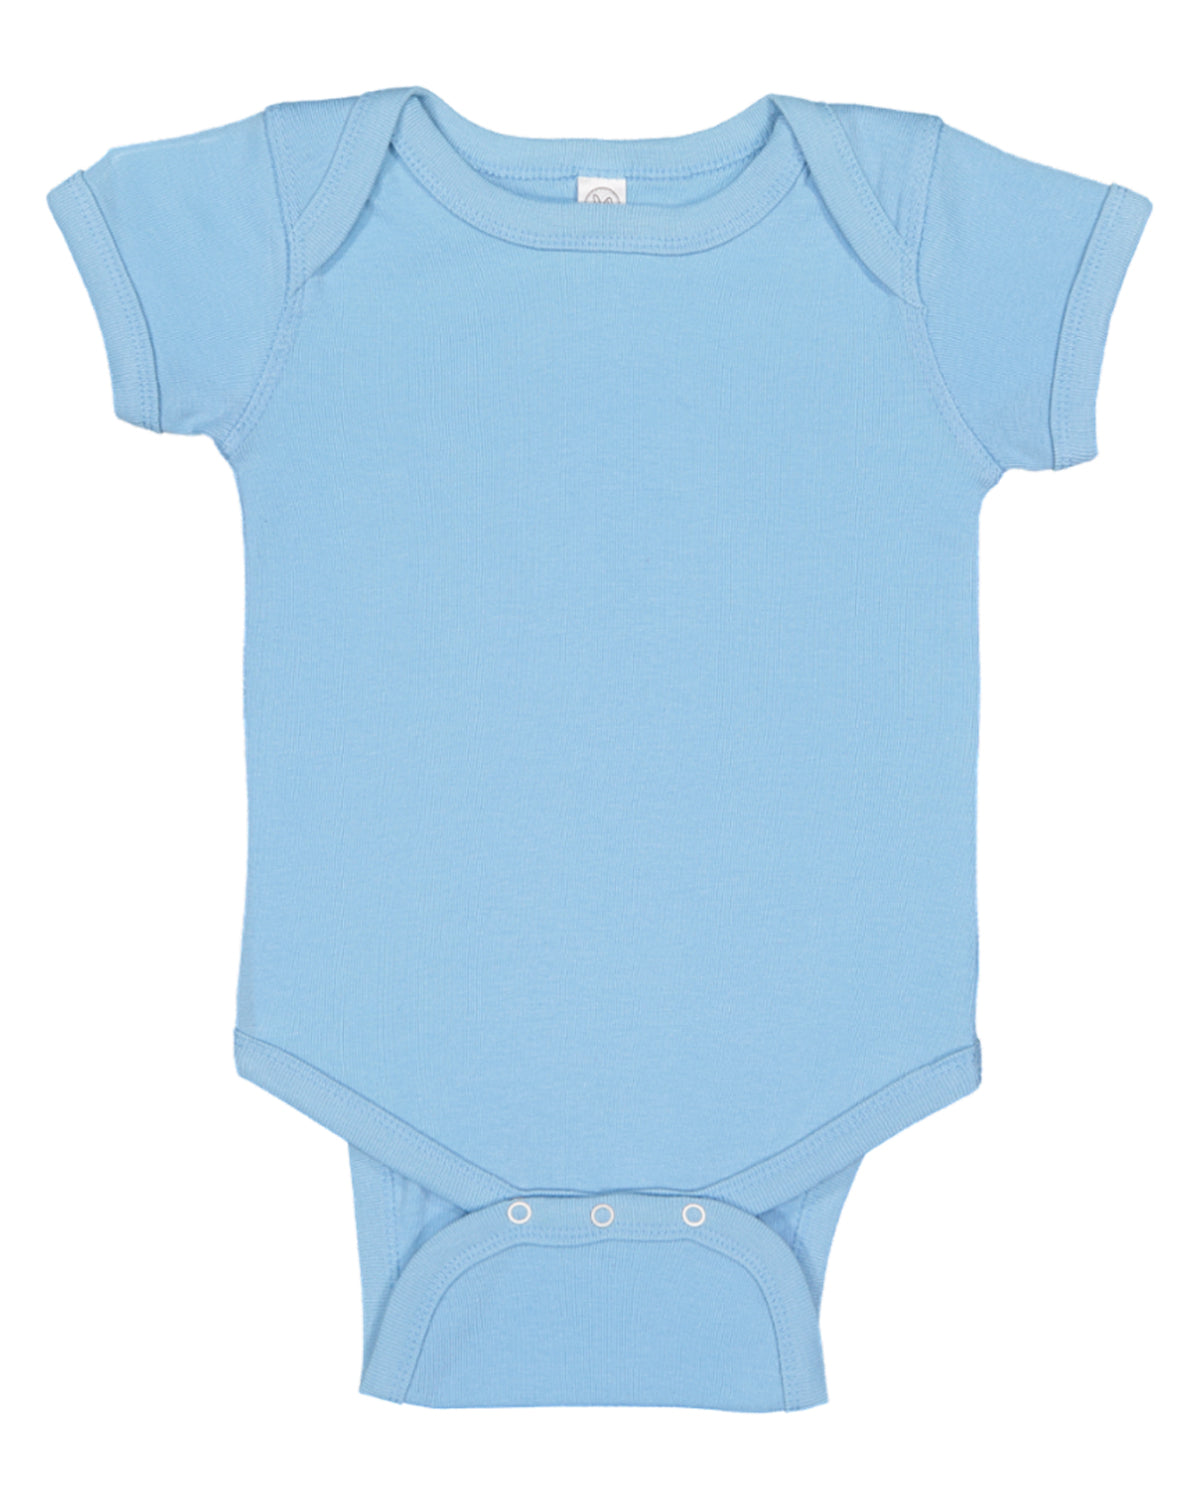 Short Sleeve -- Baby Bodysuit / Onesie -- 100% Cotton -- Light Blue